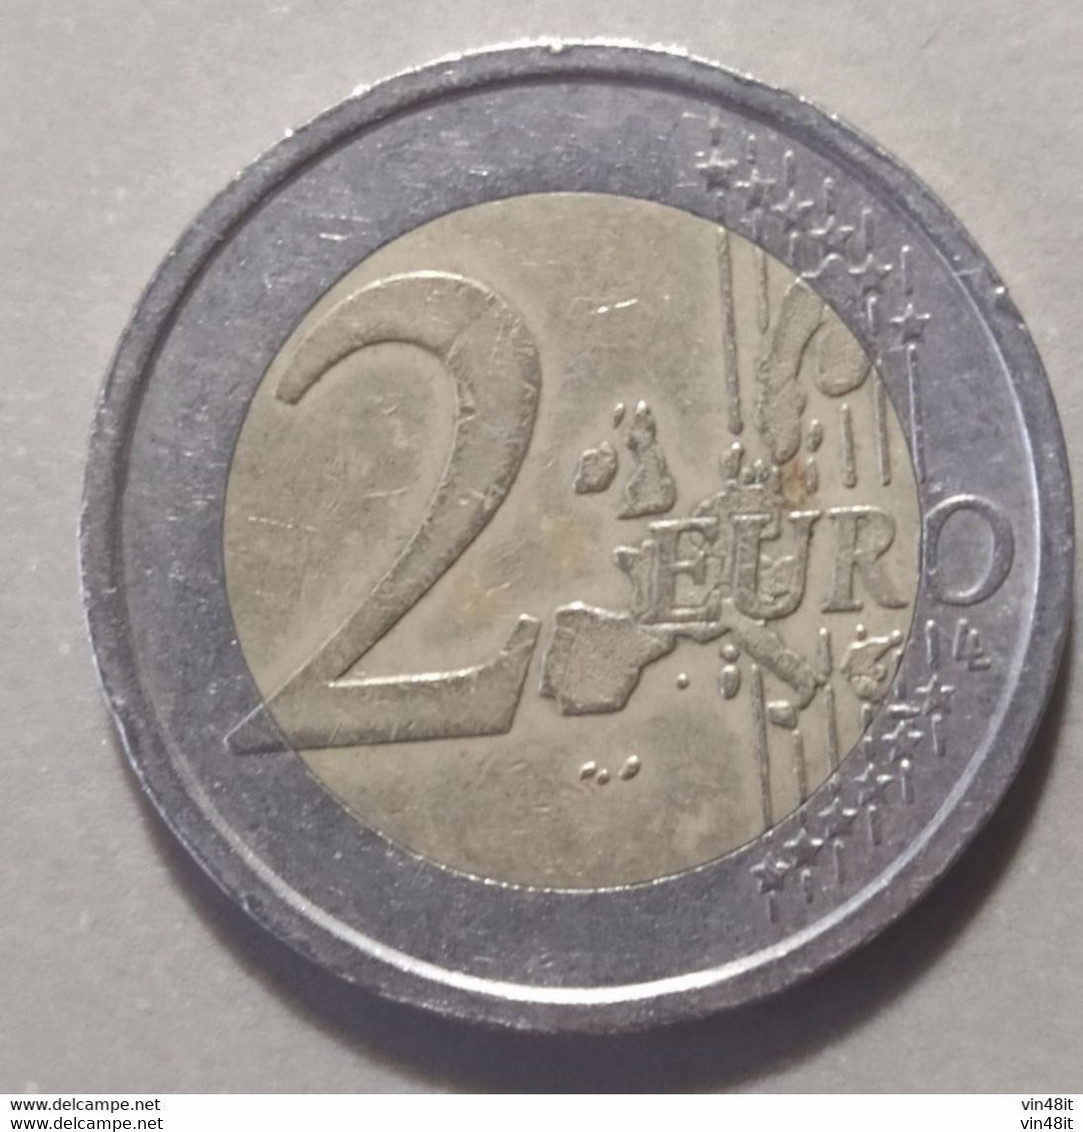 2007 - IRLANDA  - MONETA IN EURO - DEL VALORE DI  2,00  EURO   - USATA - Irlande